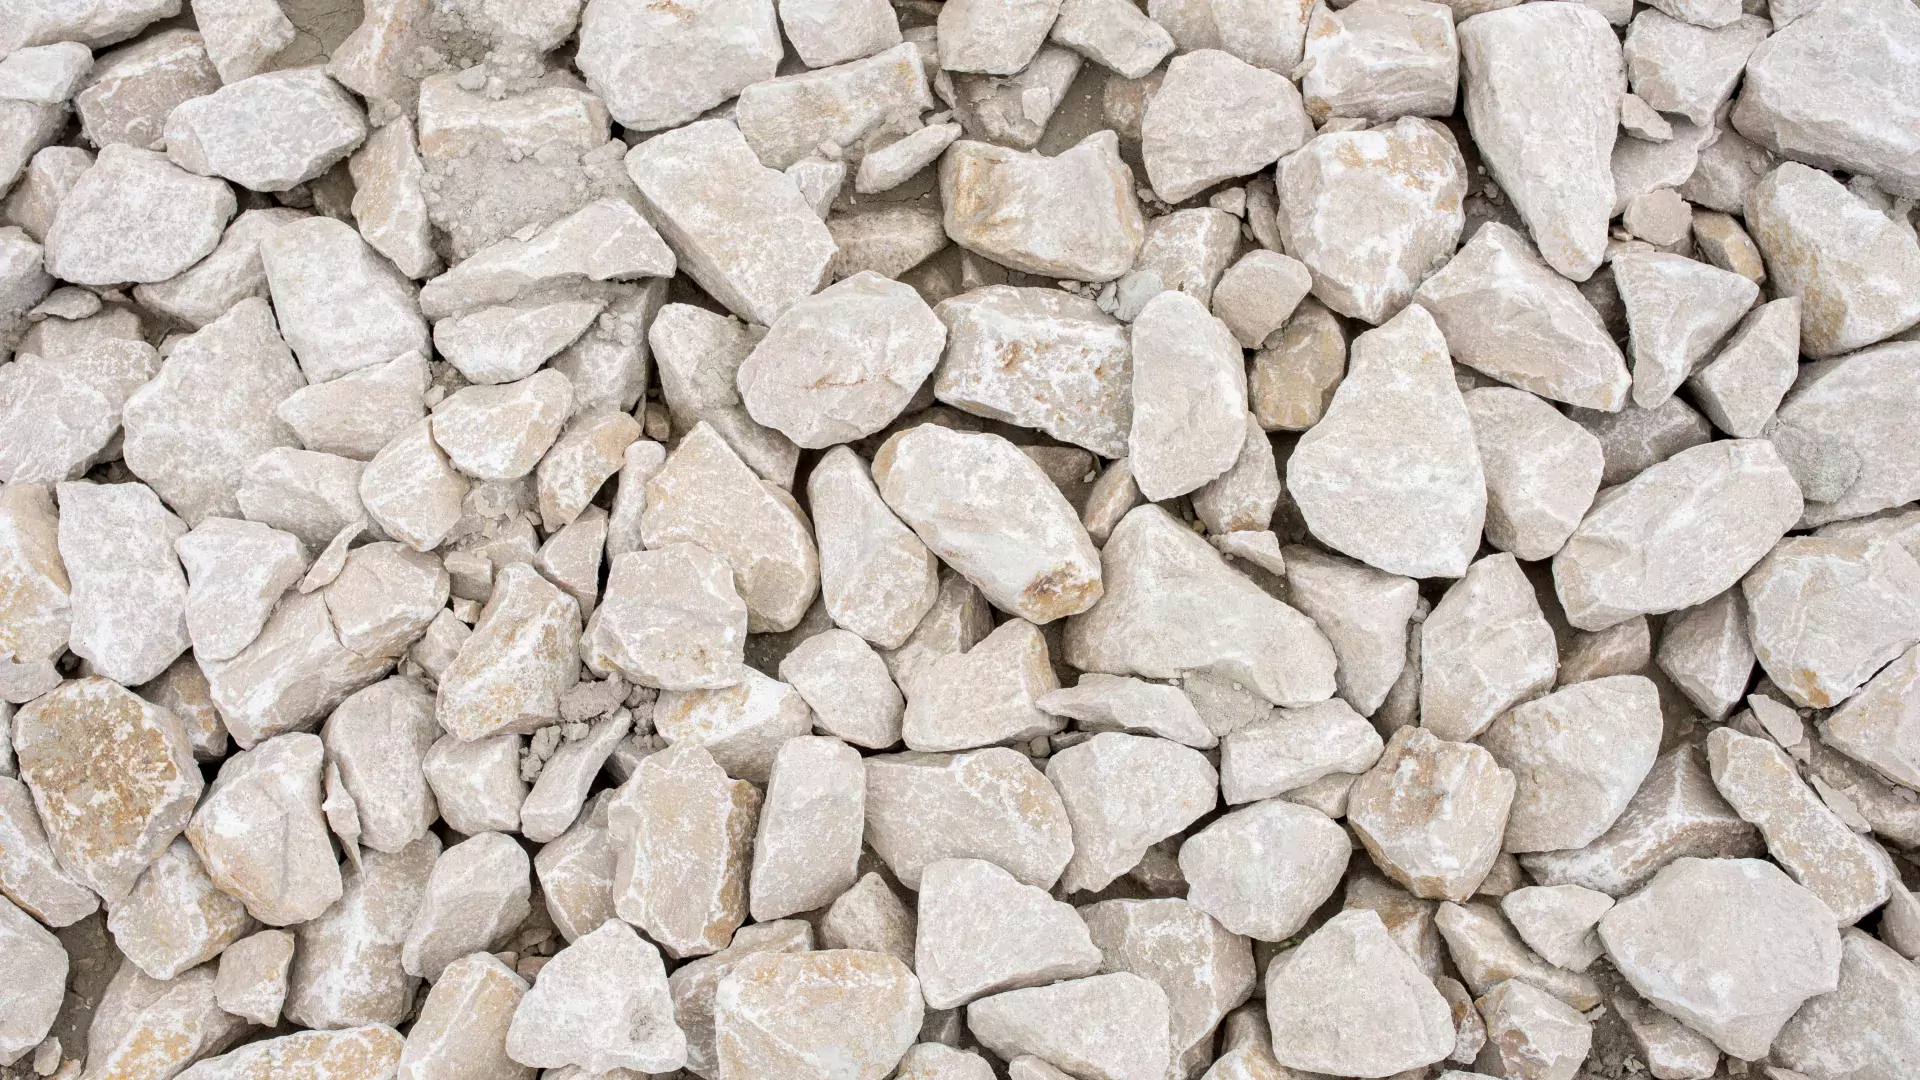 Close up of pile of limestone rocks